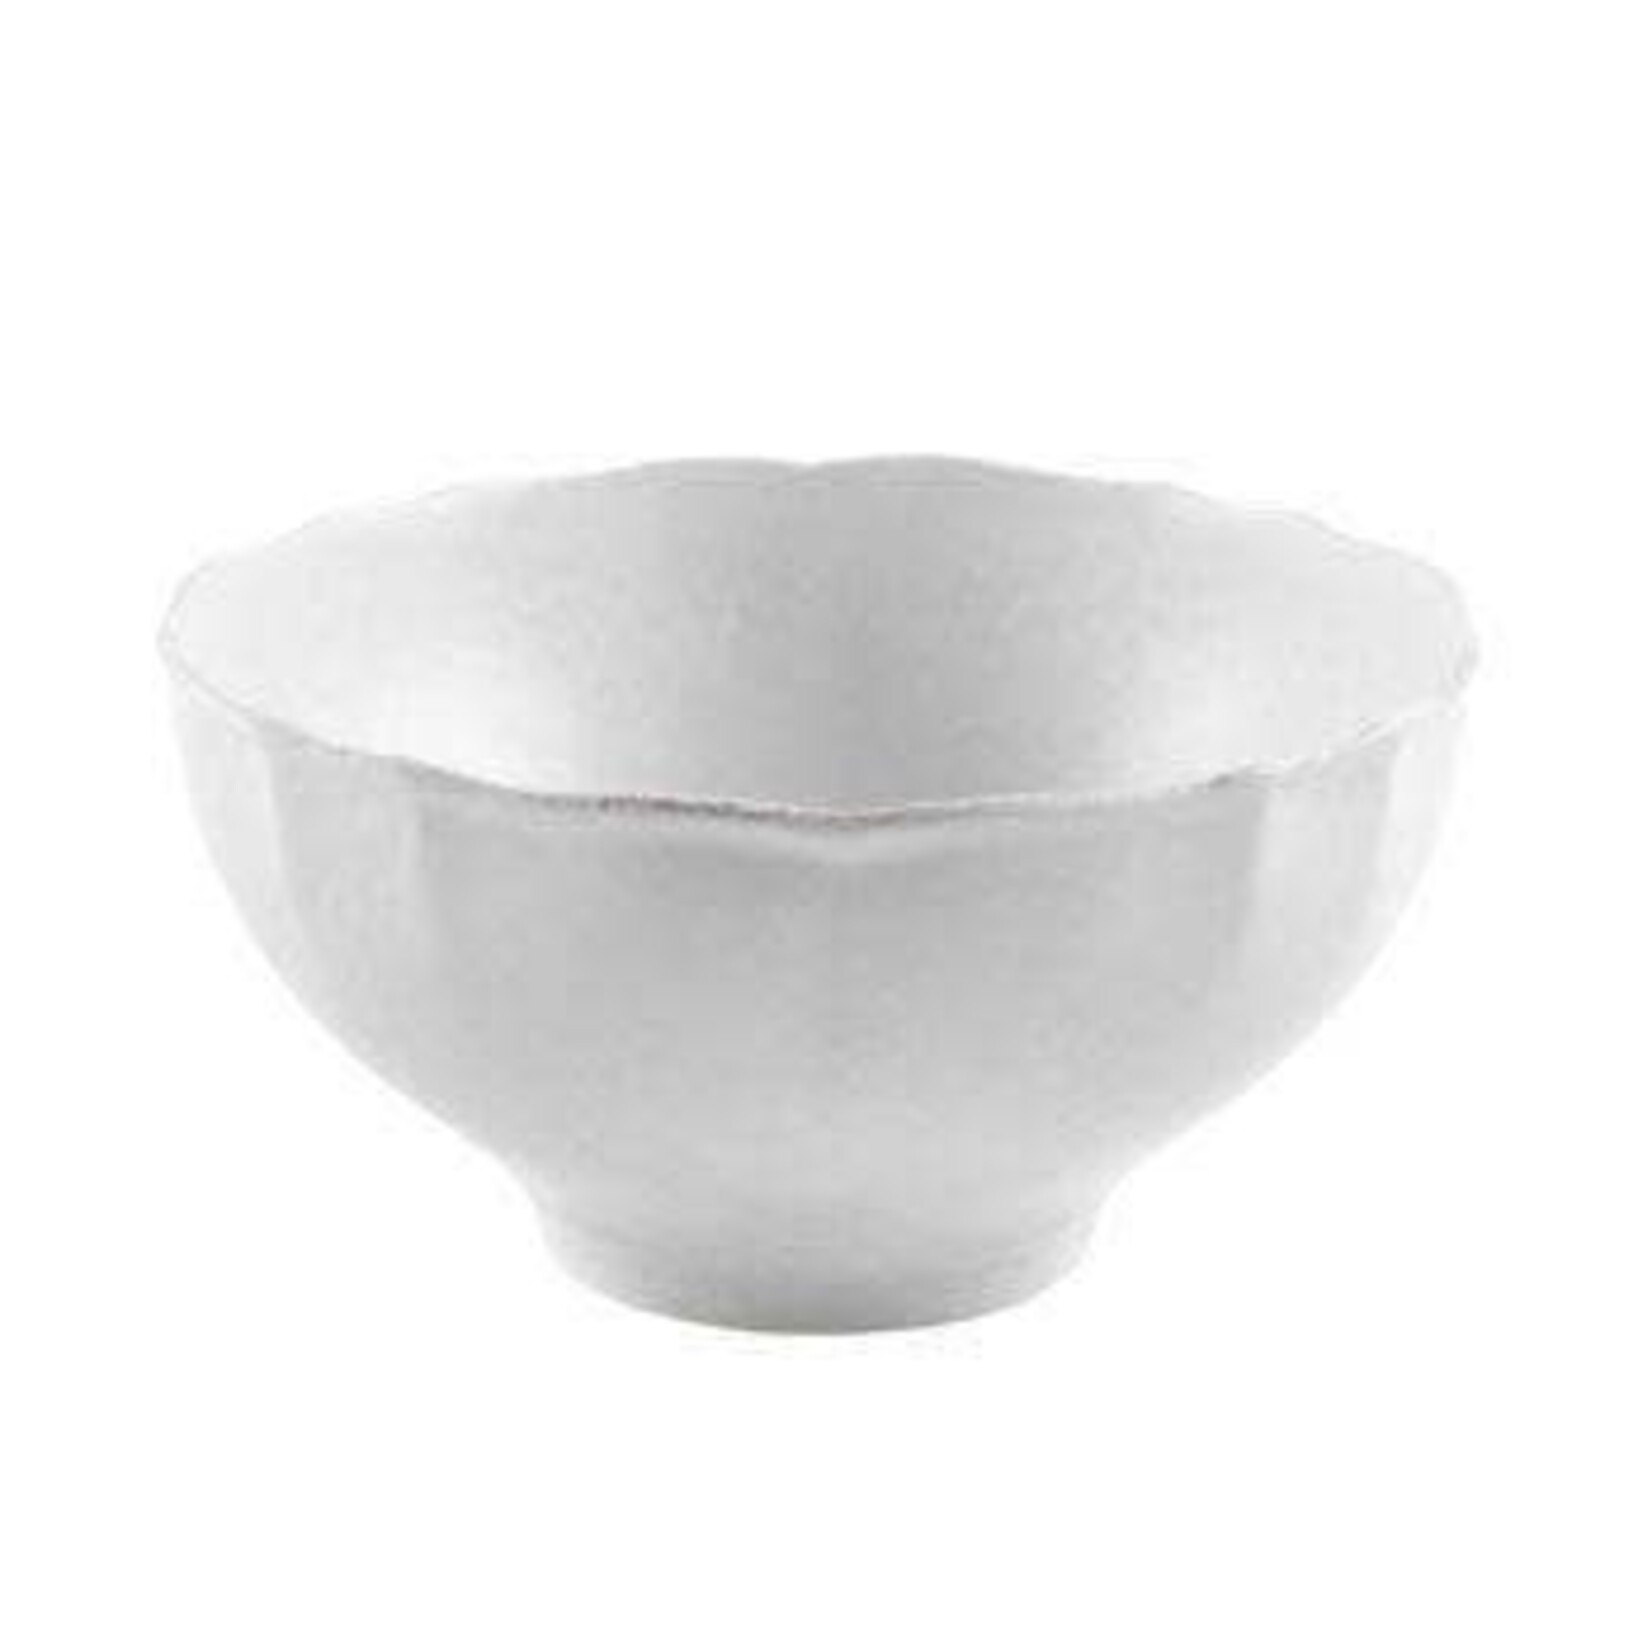 CASAFINA LIVING Impressions Soup/Cereal Bowl 6", White